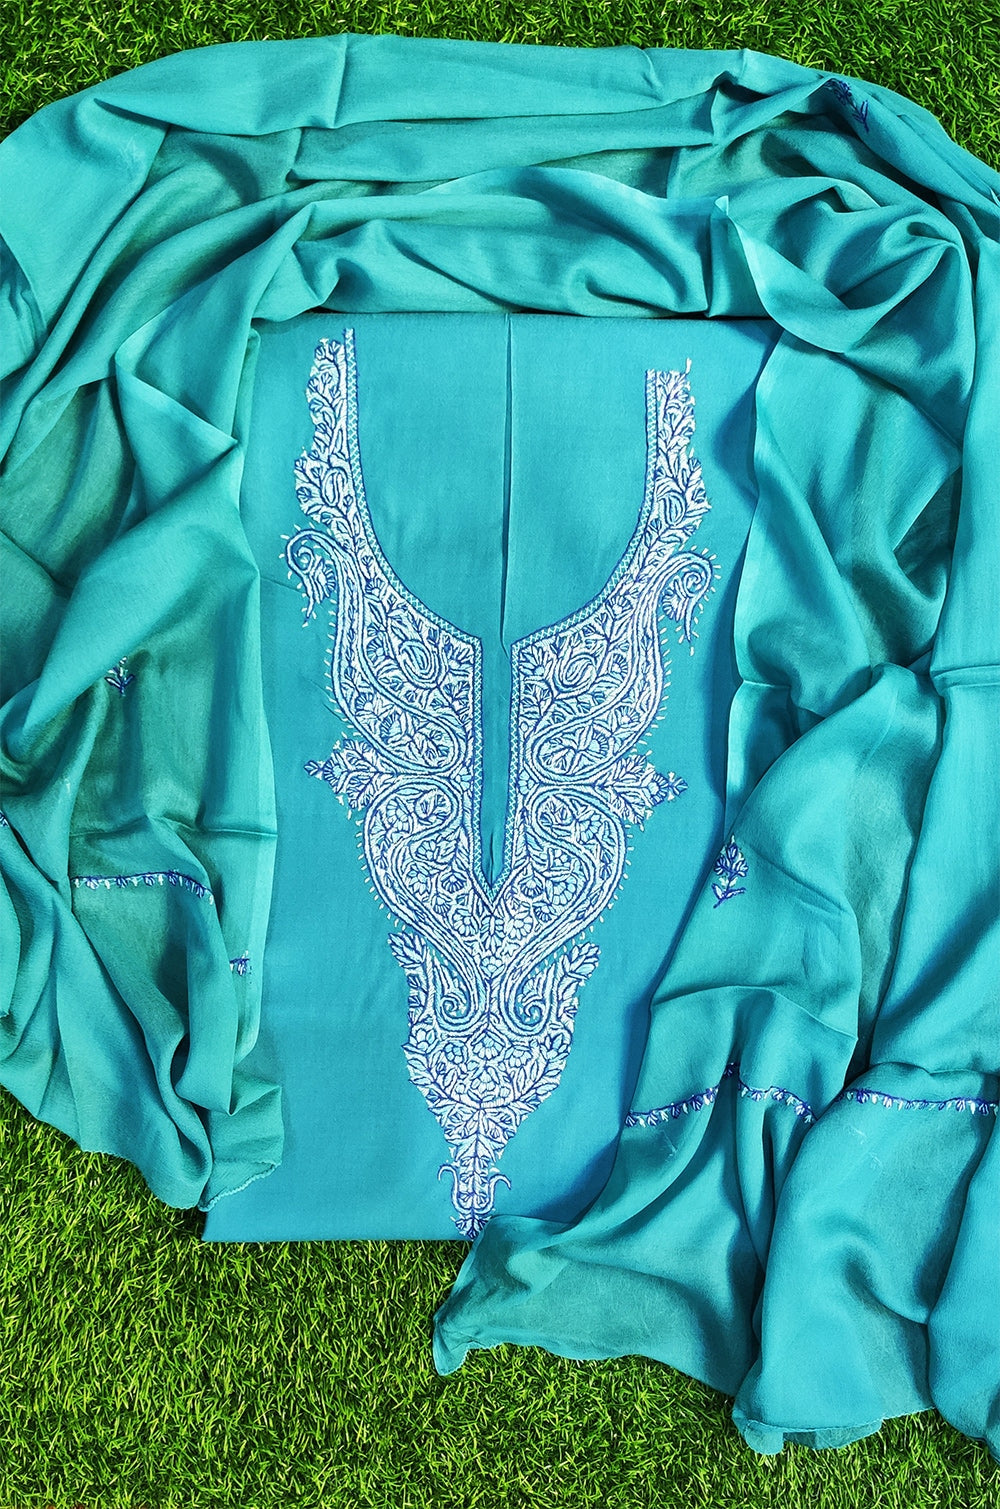 Turquise Blue Colour Cotton Suit With Beautiful Kashmiri